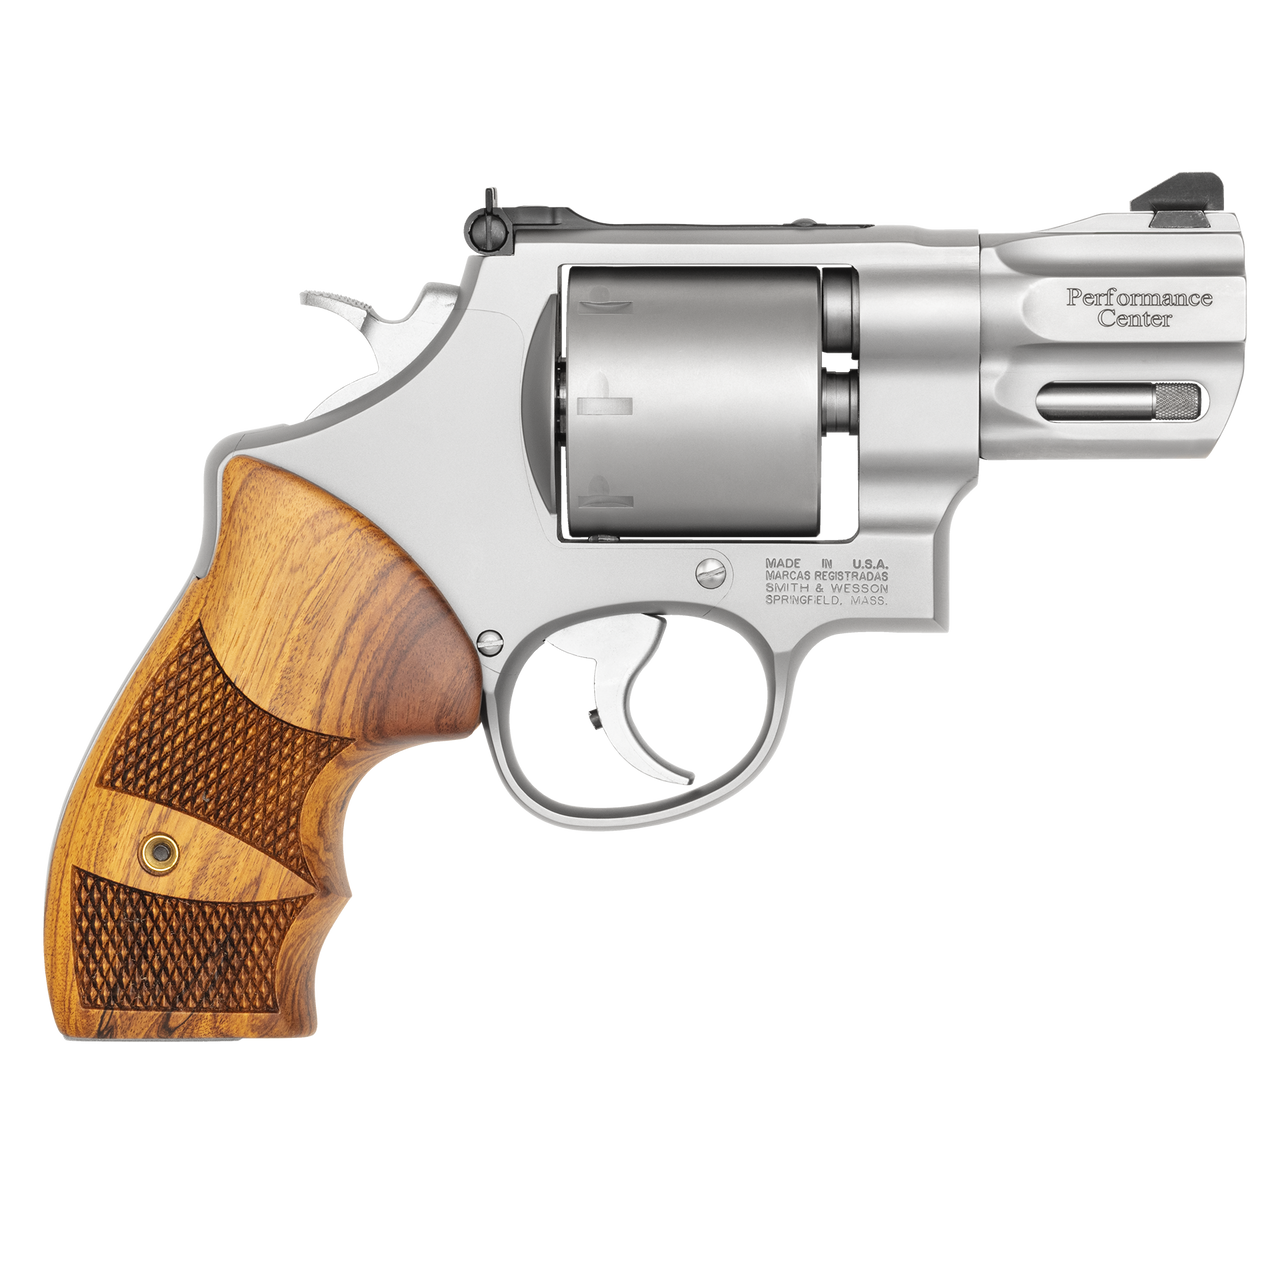 Buy Smith & Wesson Performance Center Model 627 Revolver Online